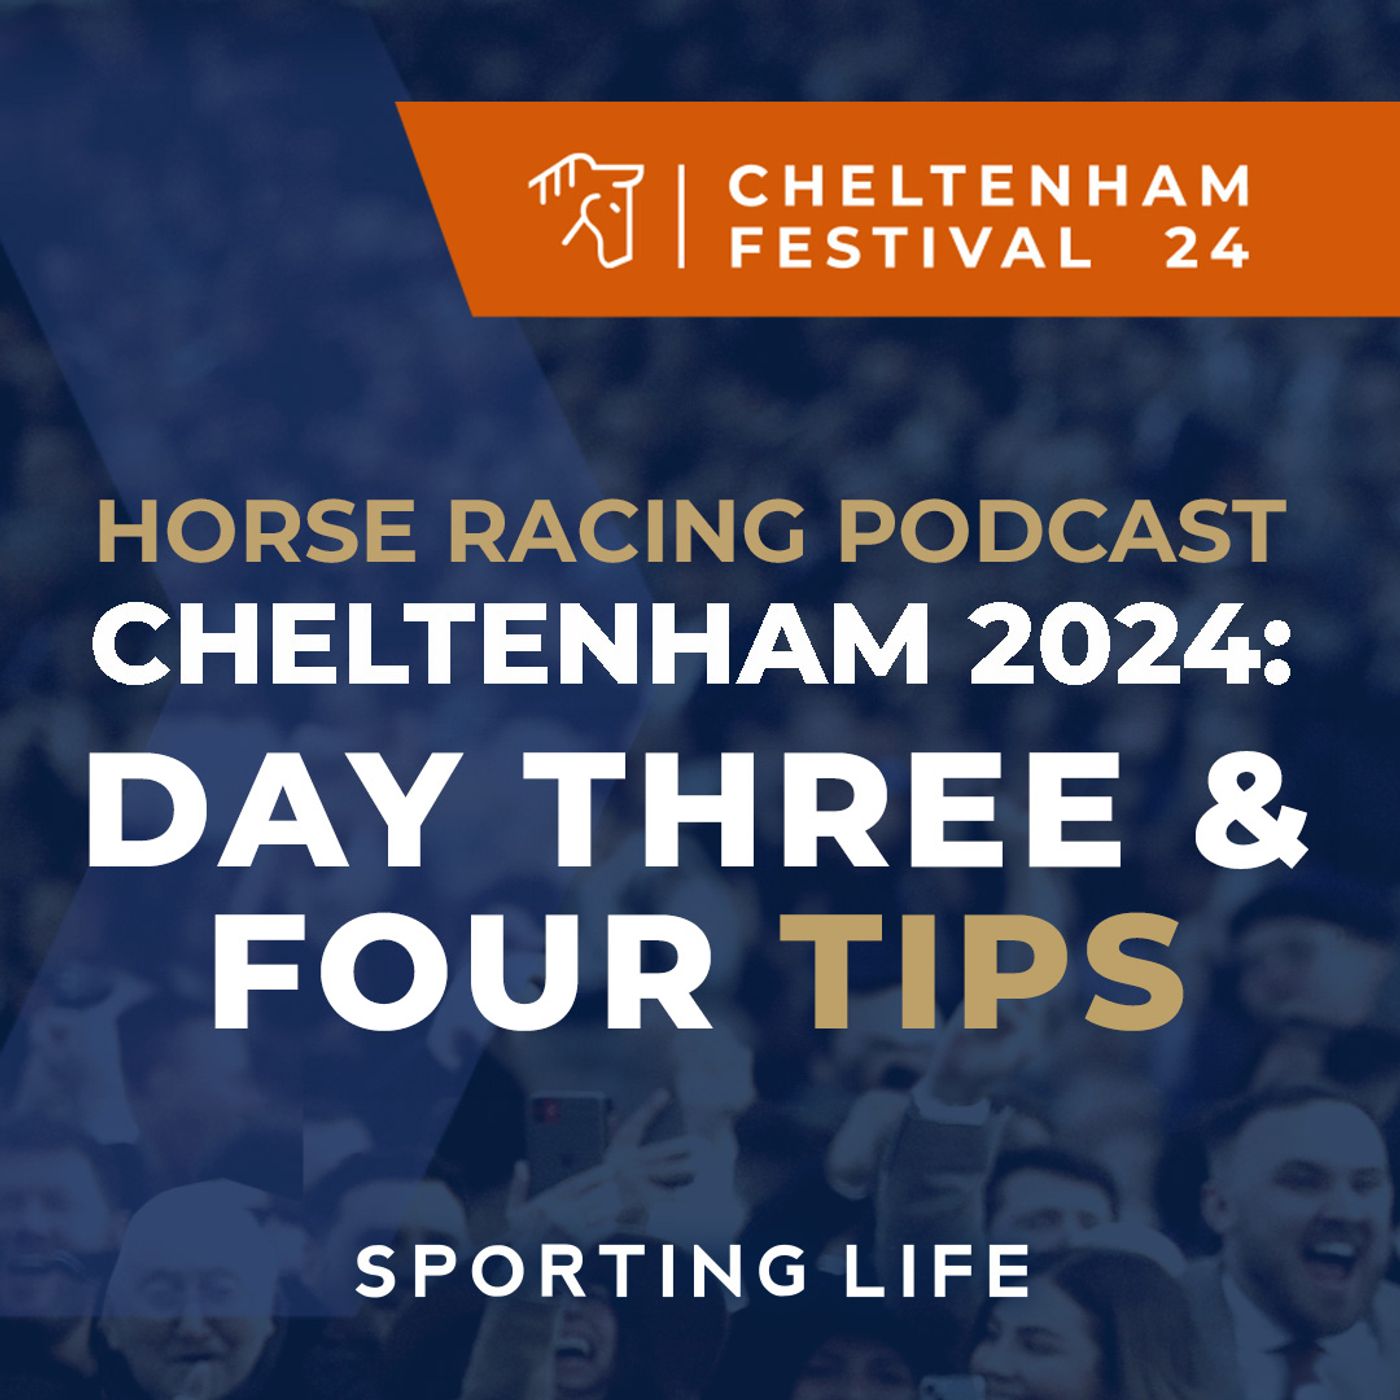 Horse Racing Podcast: Cheltenham Festival Day Three & Four Tips